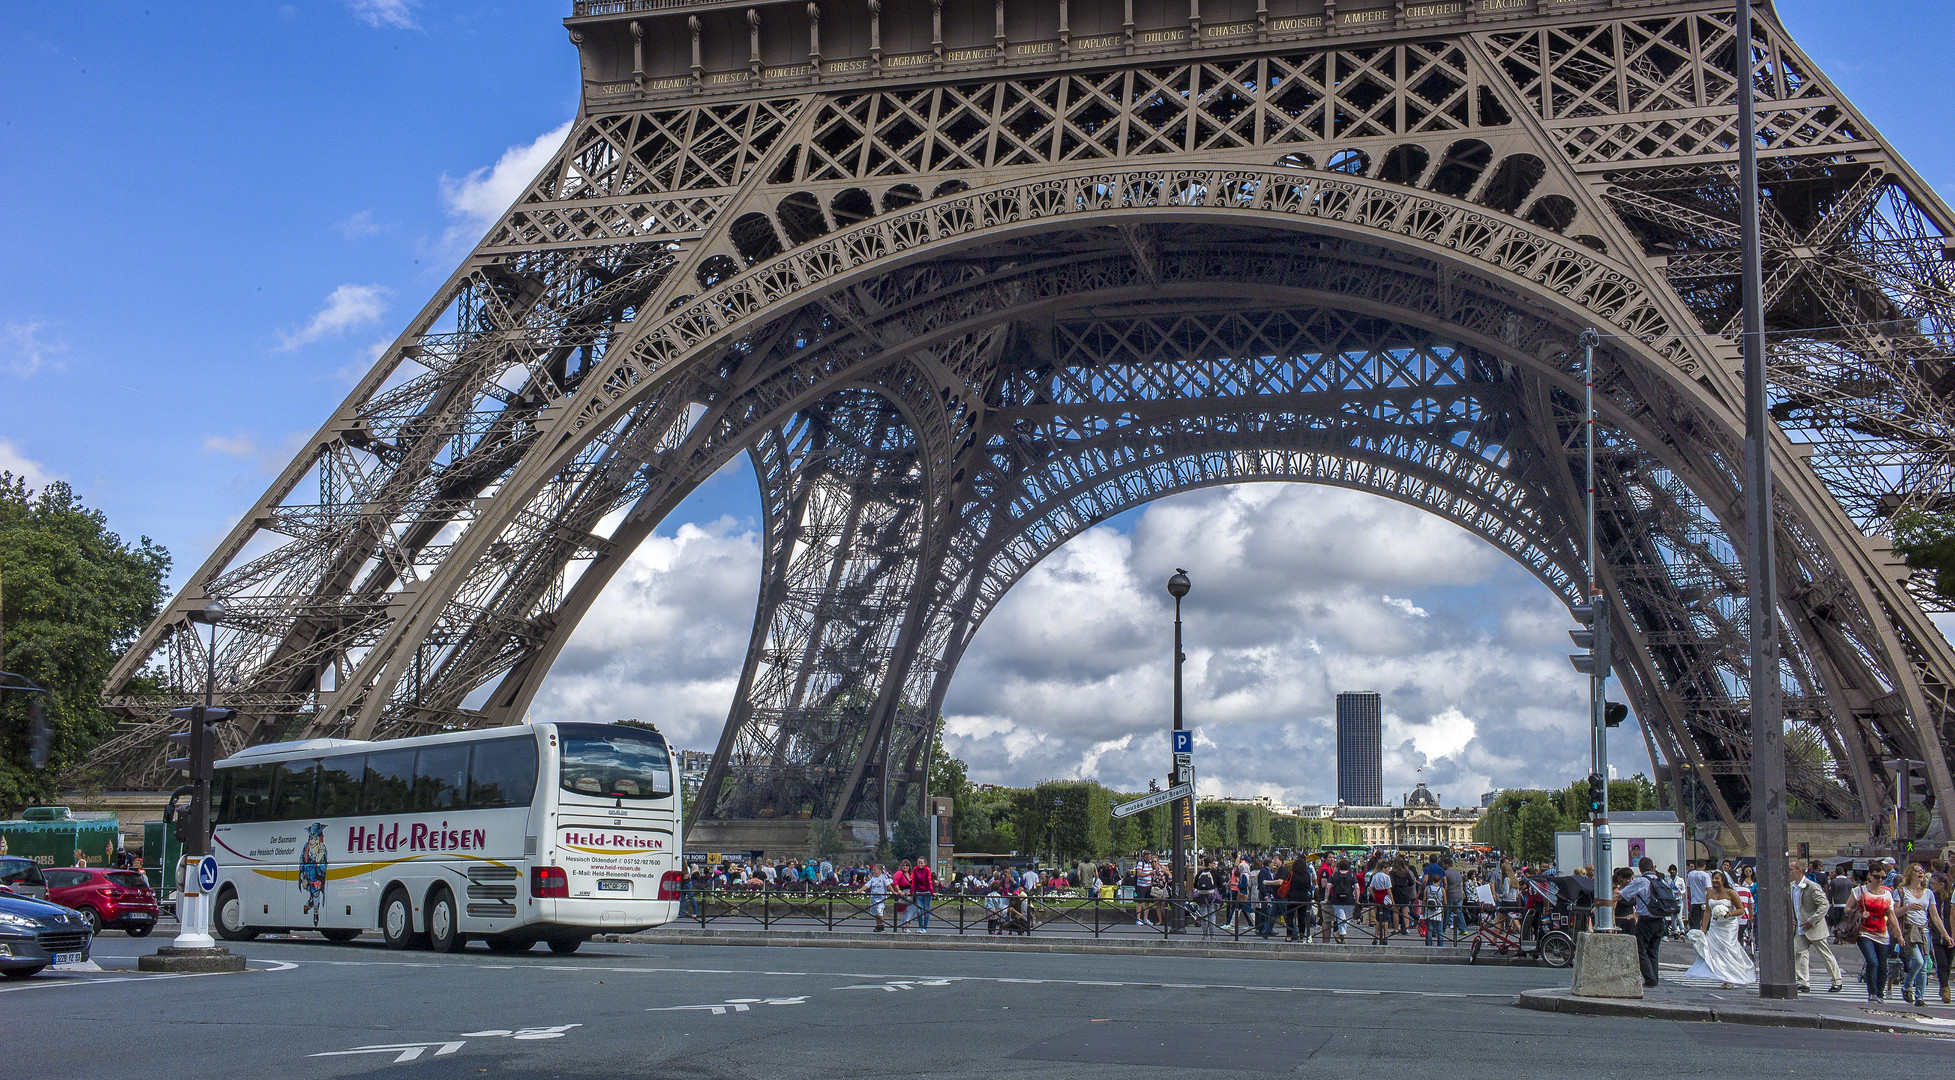 Heiraten unterm Eiffelturm